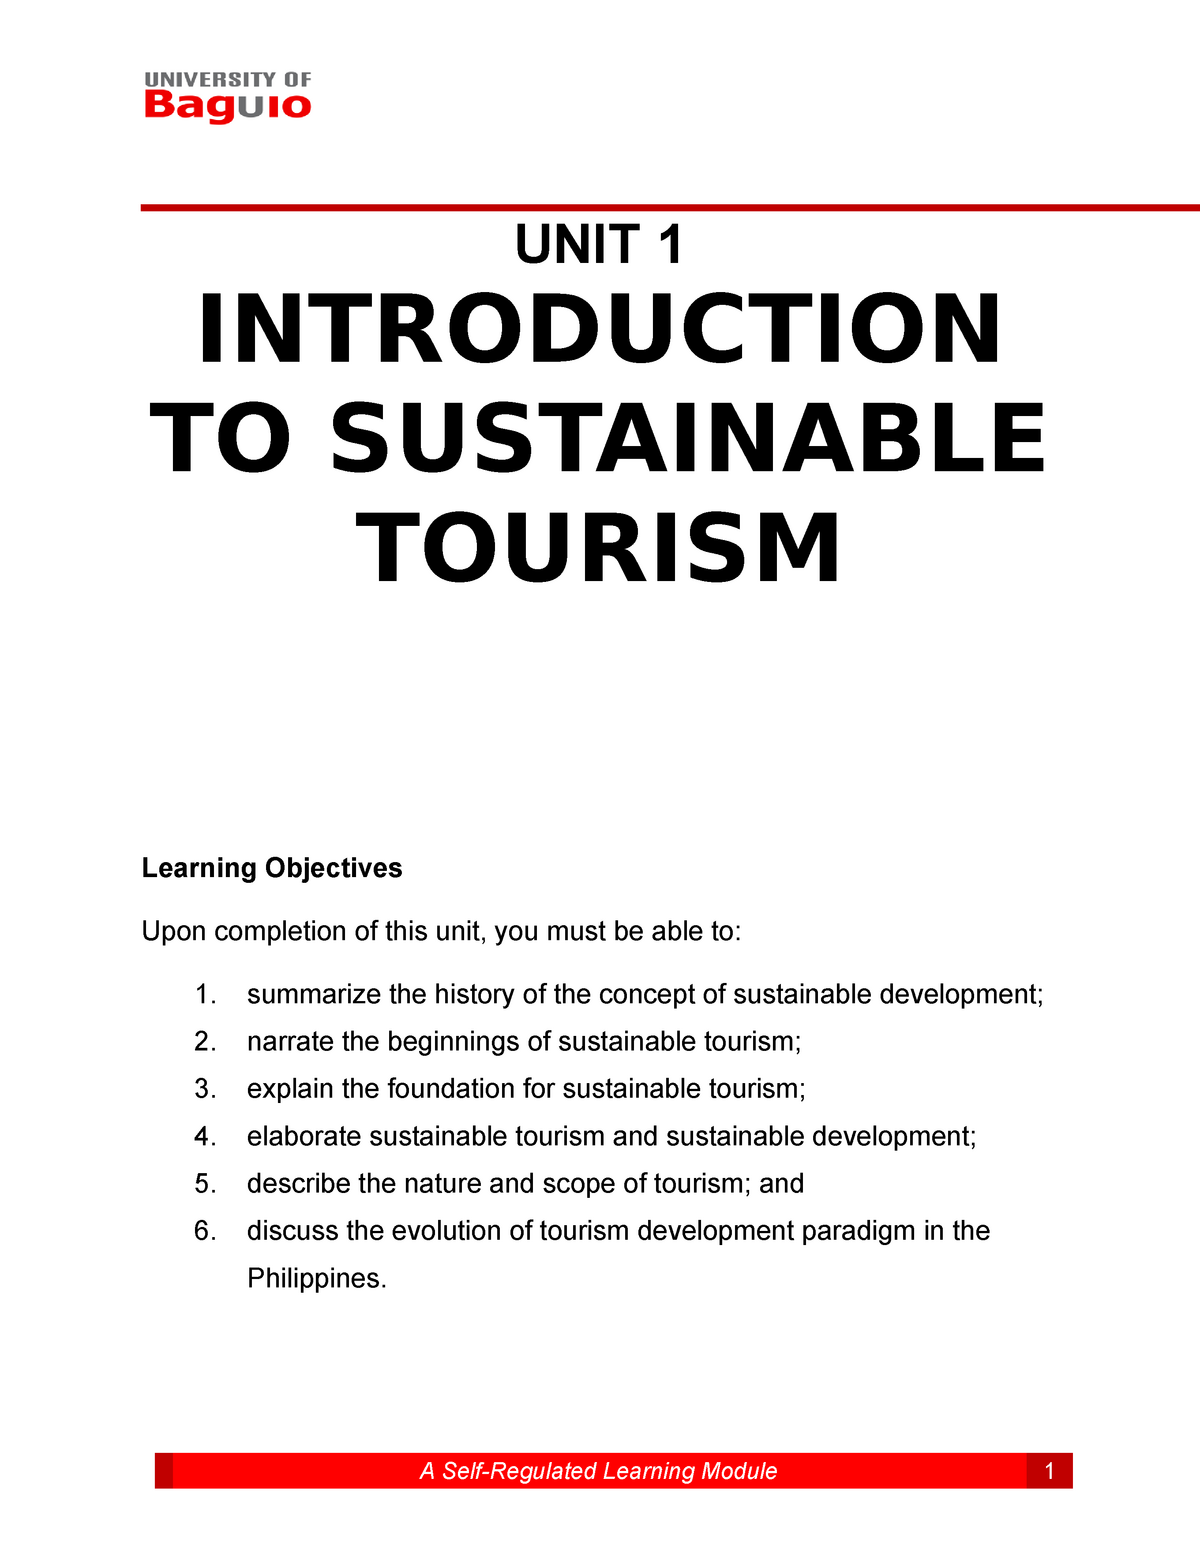 sustainable tourism dissertation topics